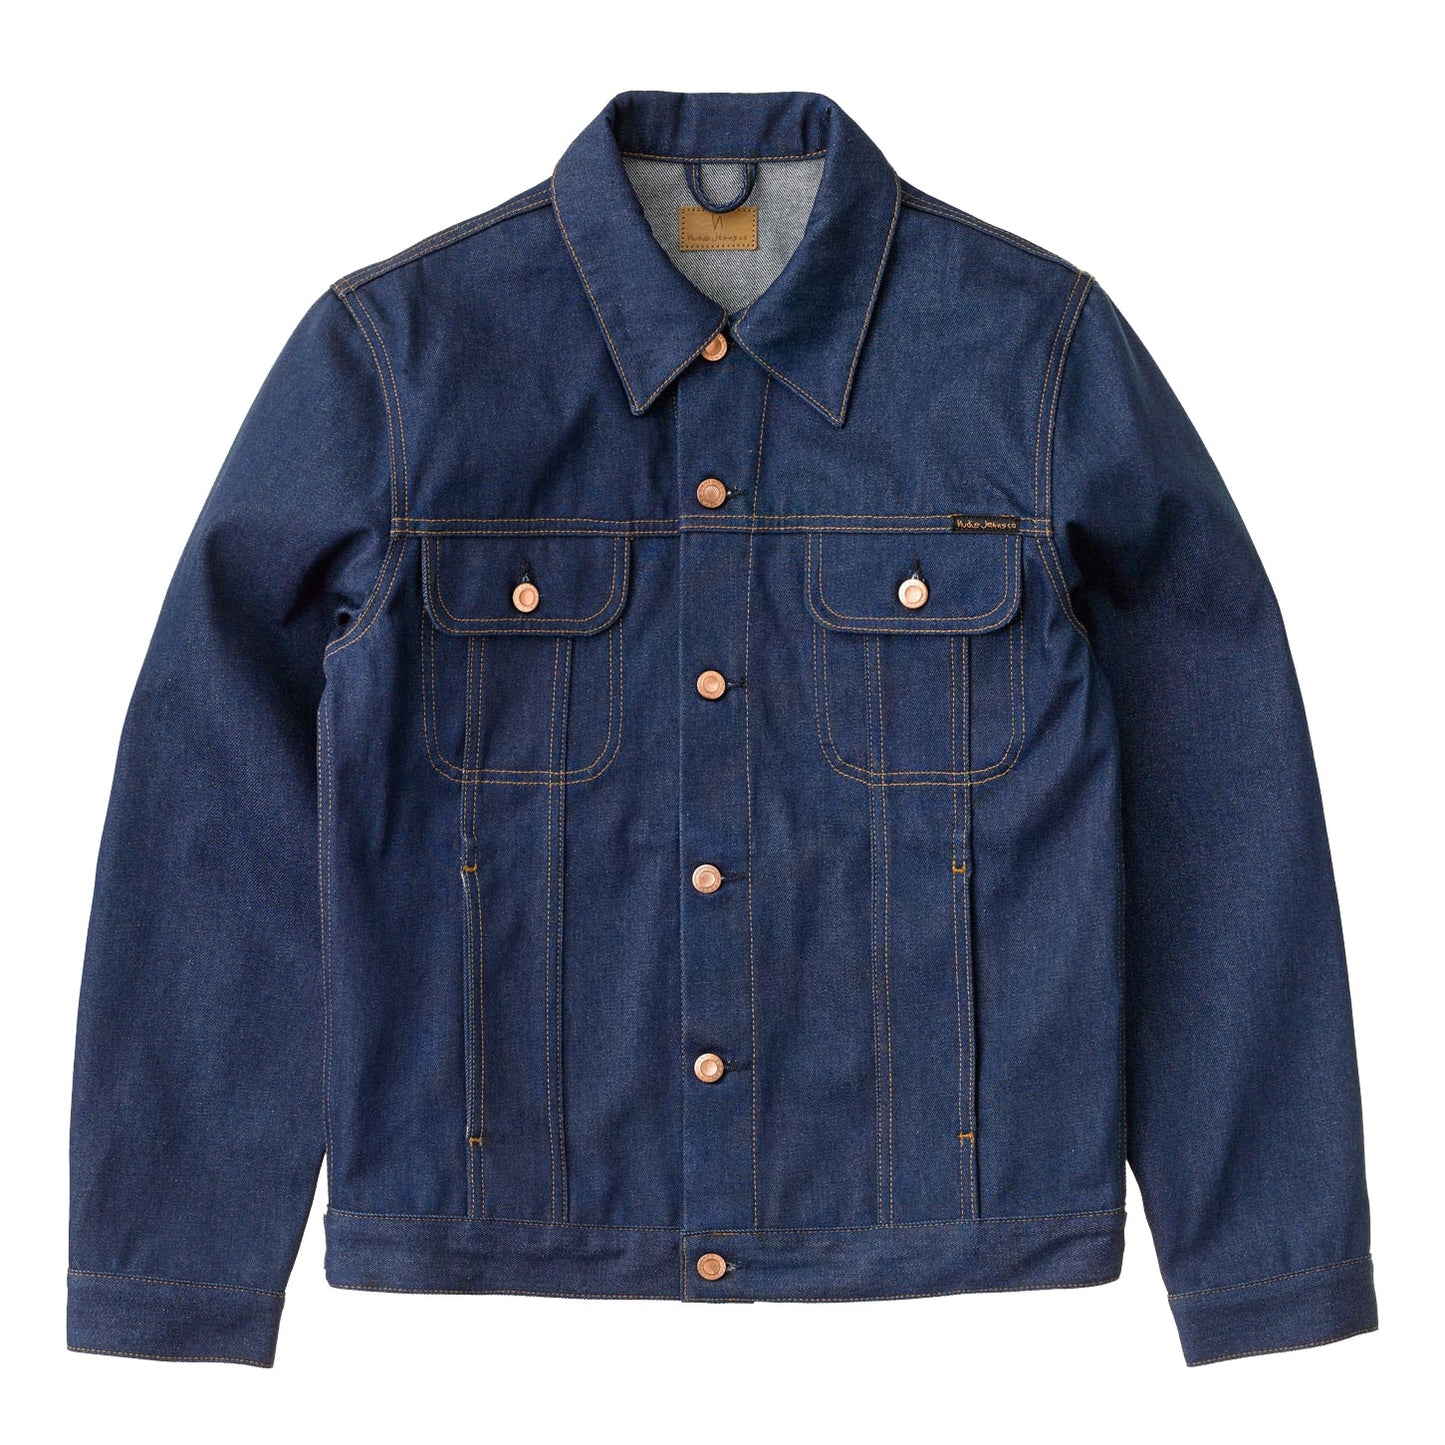 Nudie Jeans Co. Robby Dry 70s Jacket